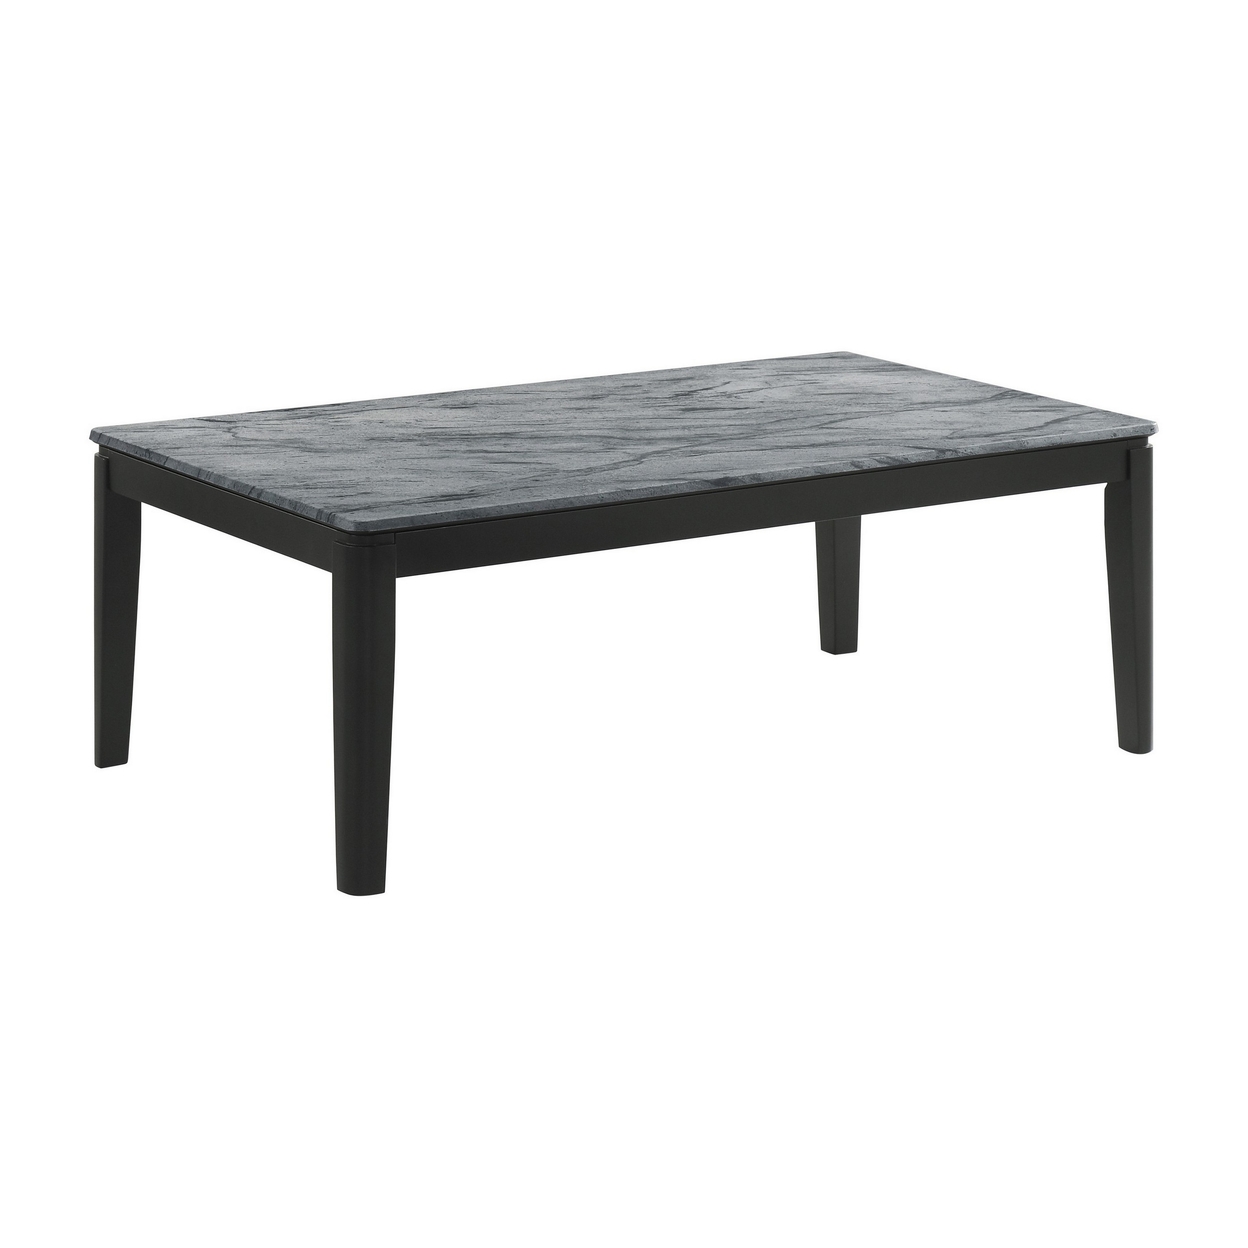 Kyo 47 Inch Coffee Table, Gray Faux Marble Top, Sandy Texturing, Black Legs- Saltoro Sherpi